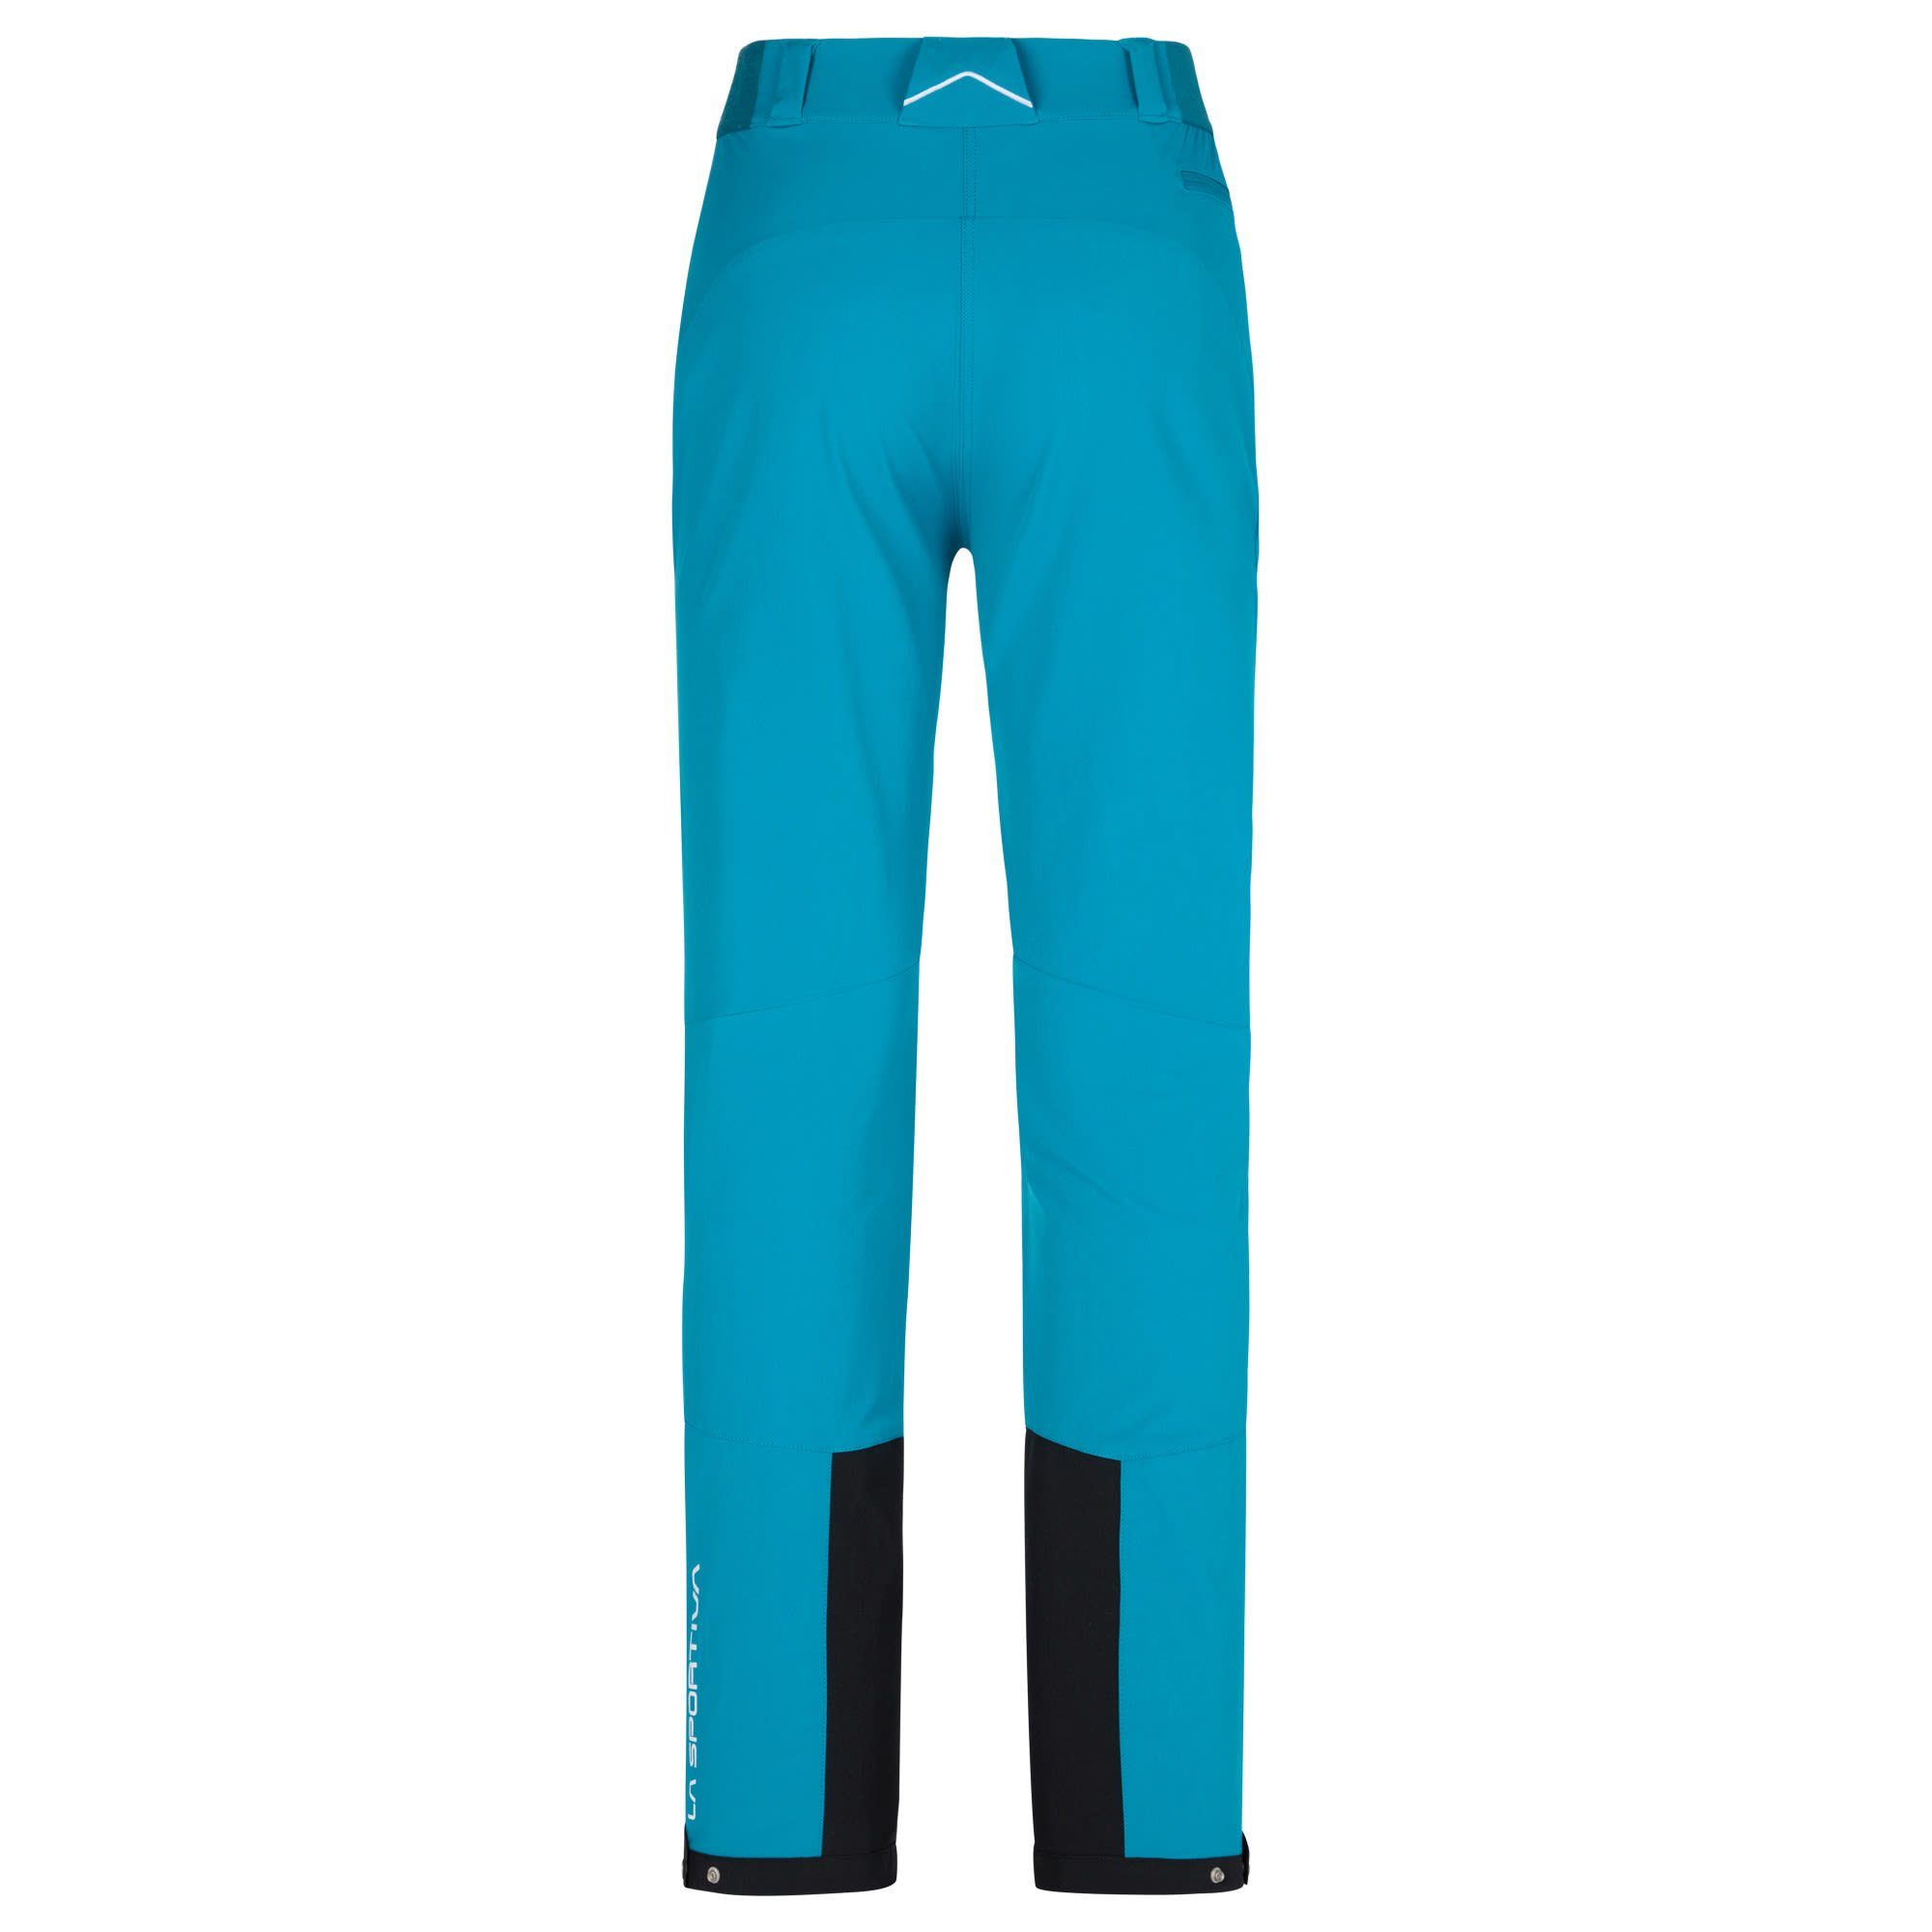 Damen La Sportiva Orizion Hose Hose Shorts blau Sportiva Pant & W La